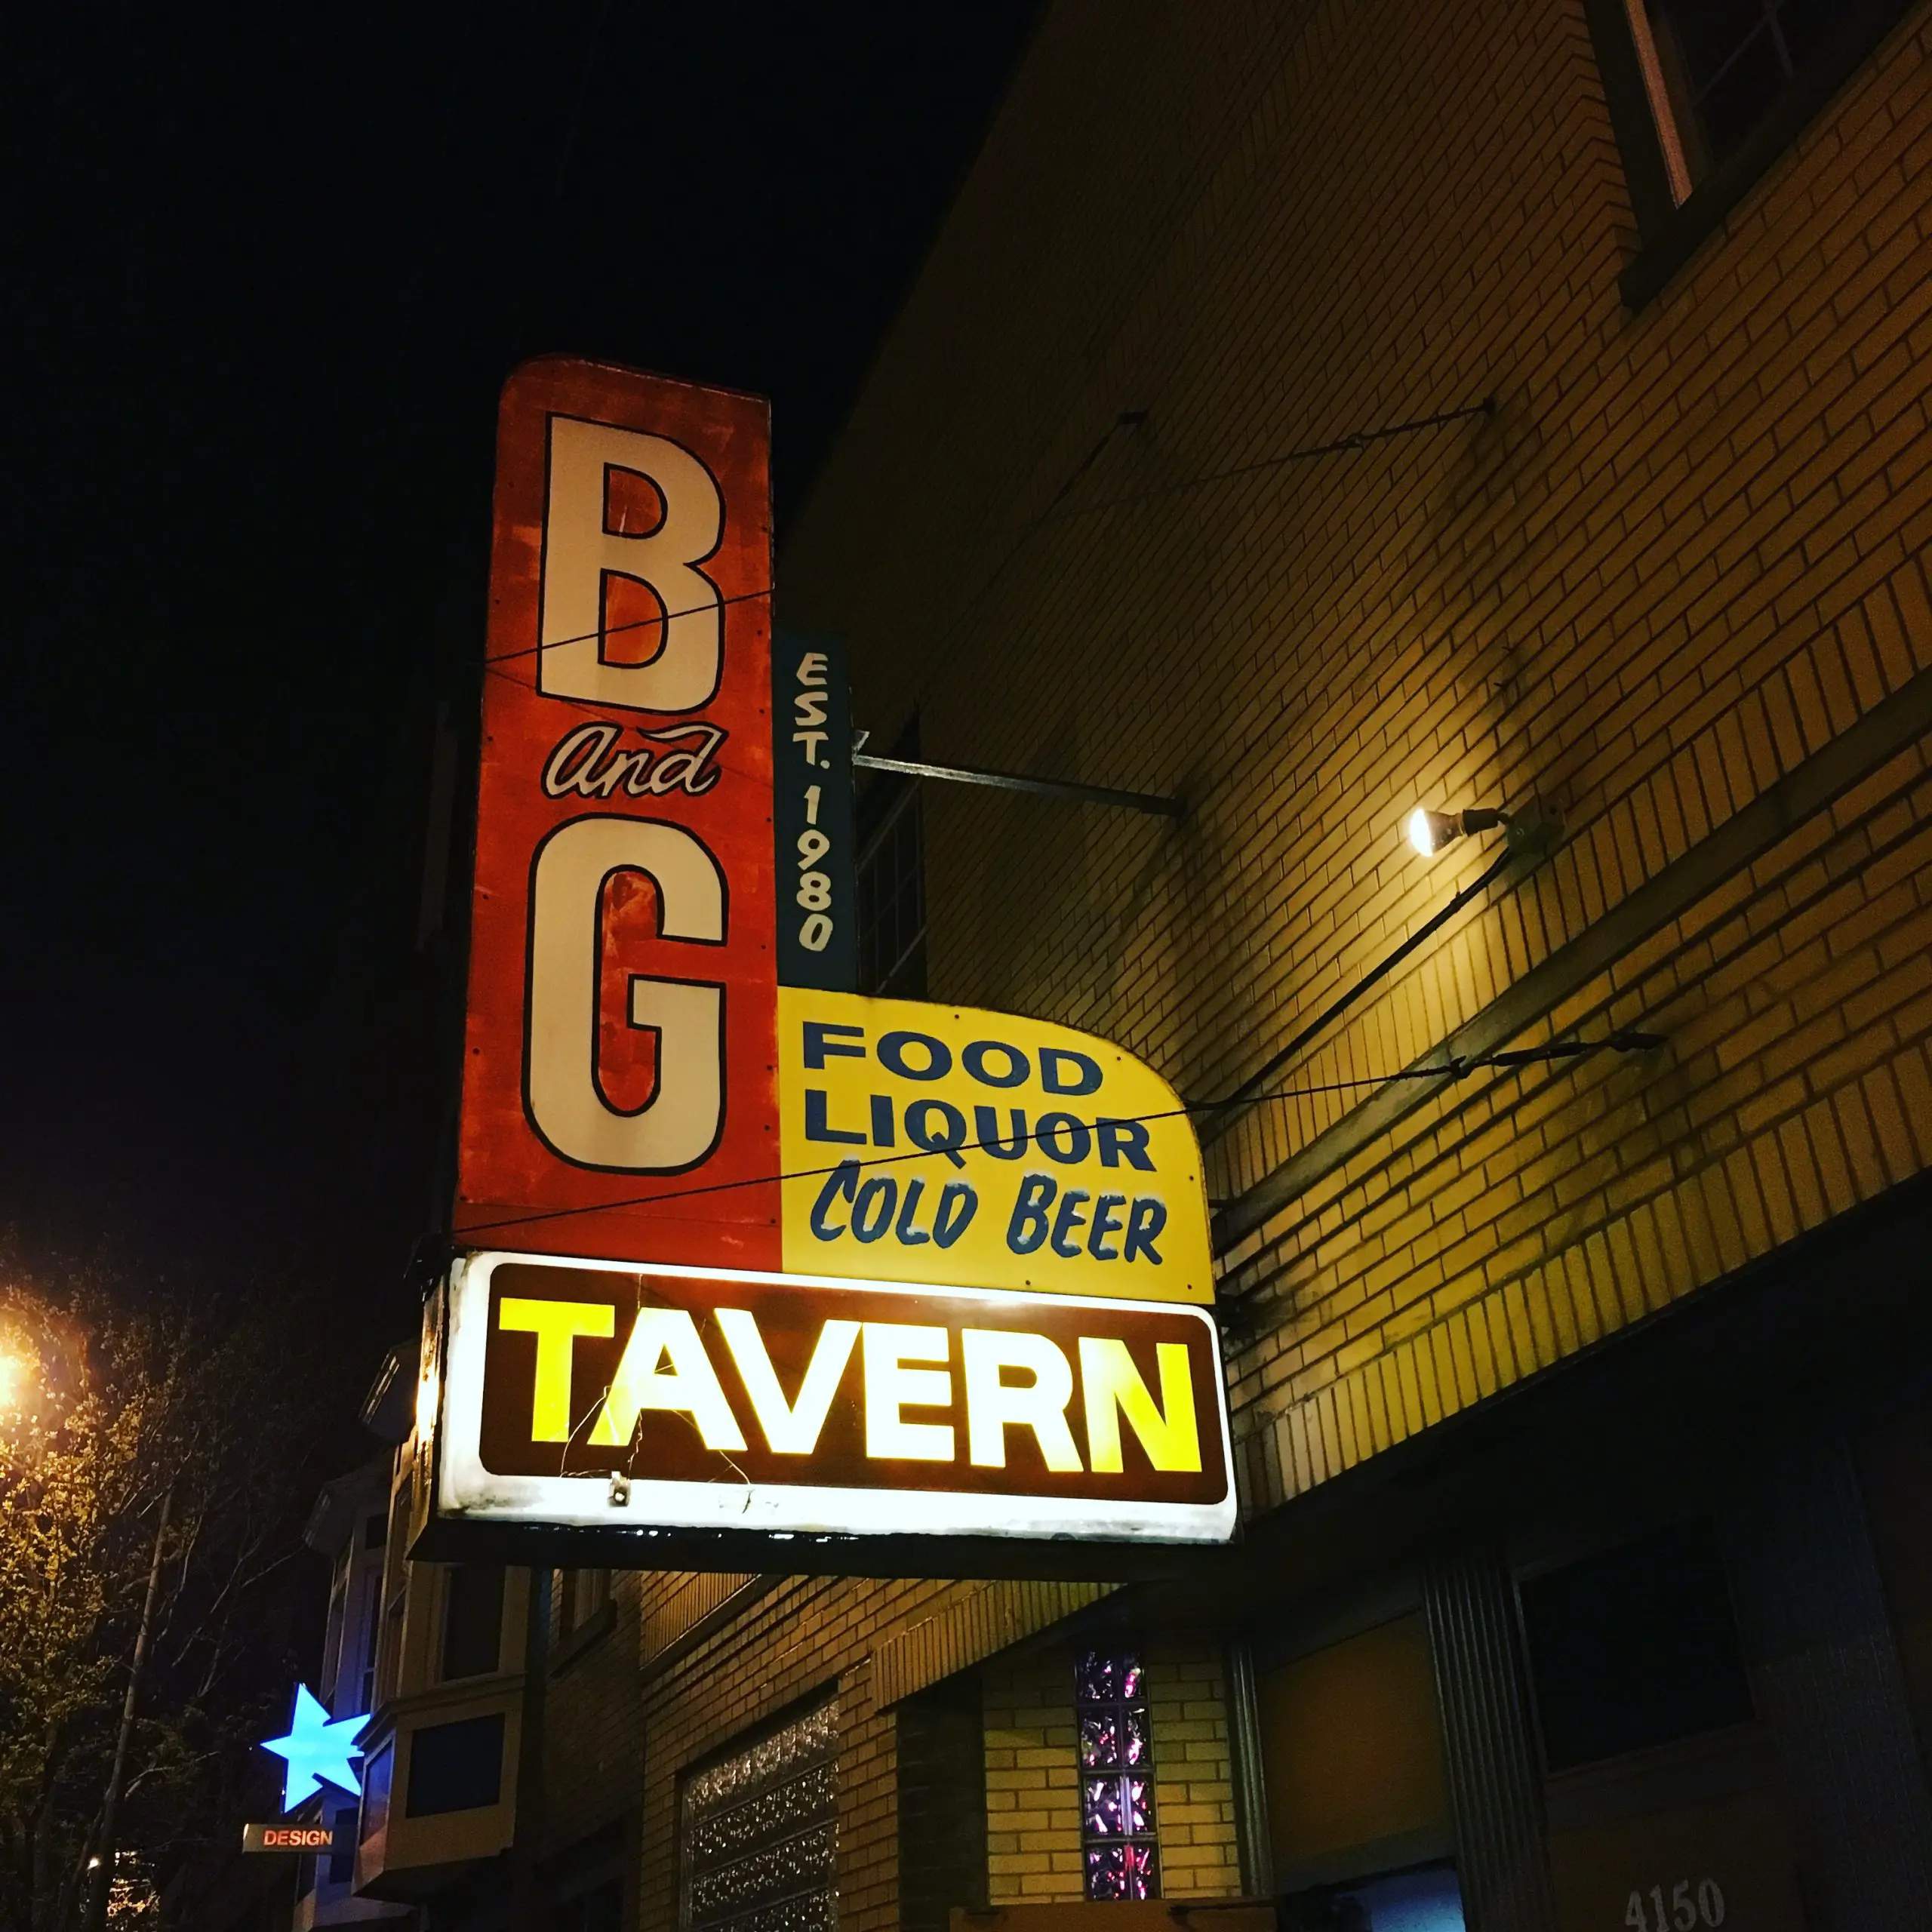 B And G Tavern - Cleveland Dive Bar - Sign